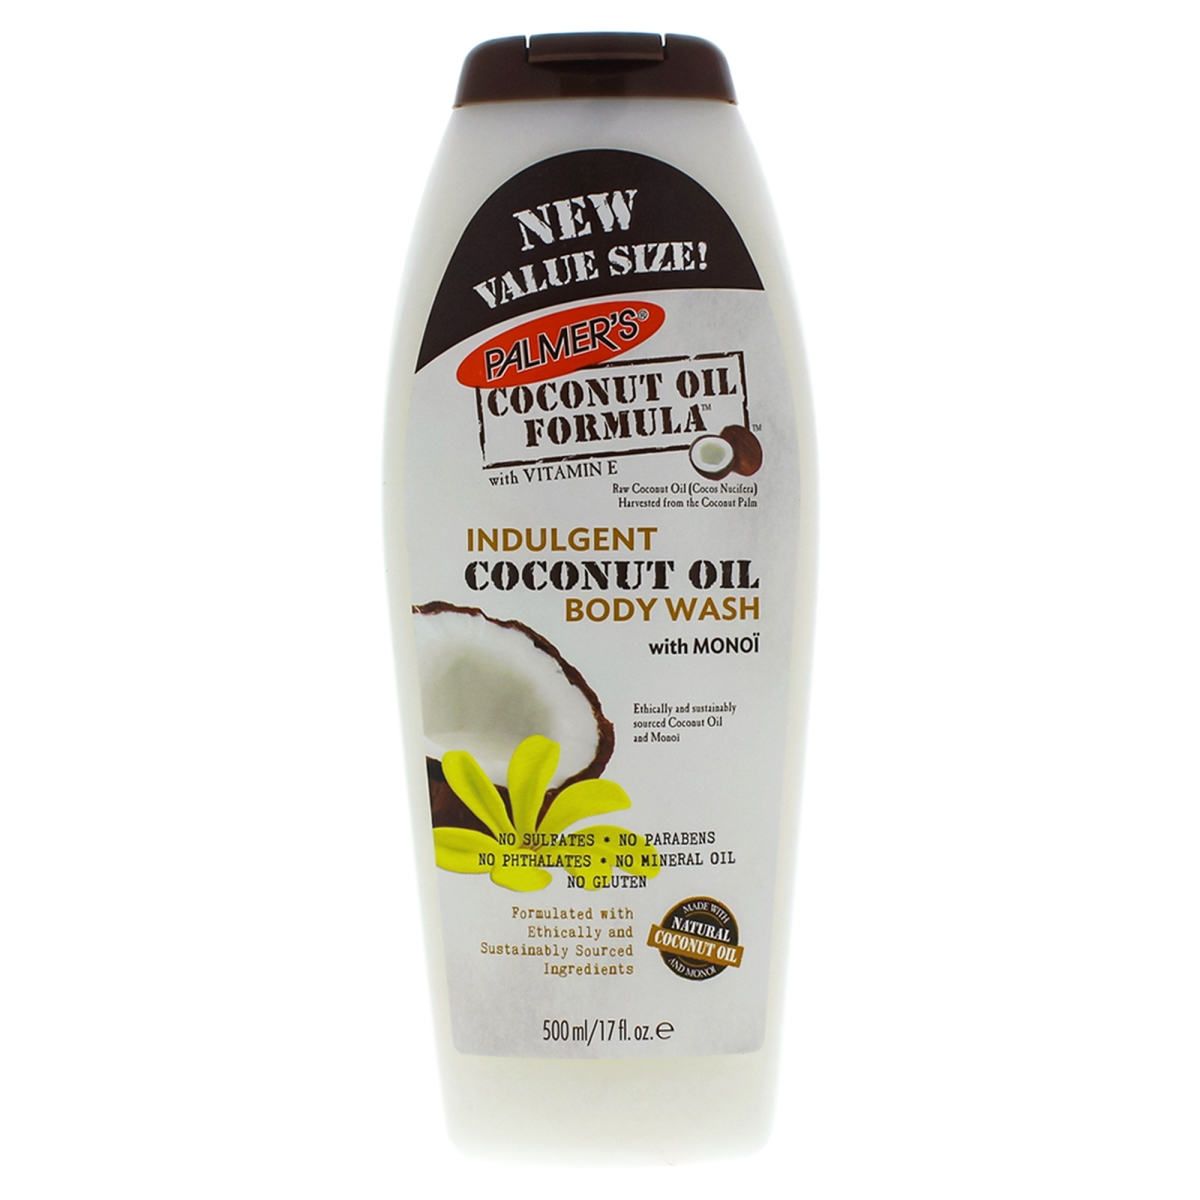 I0088416 Coconut Oil Indulgent Body Wash For Unisex - 17 Oz